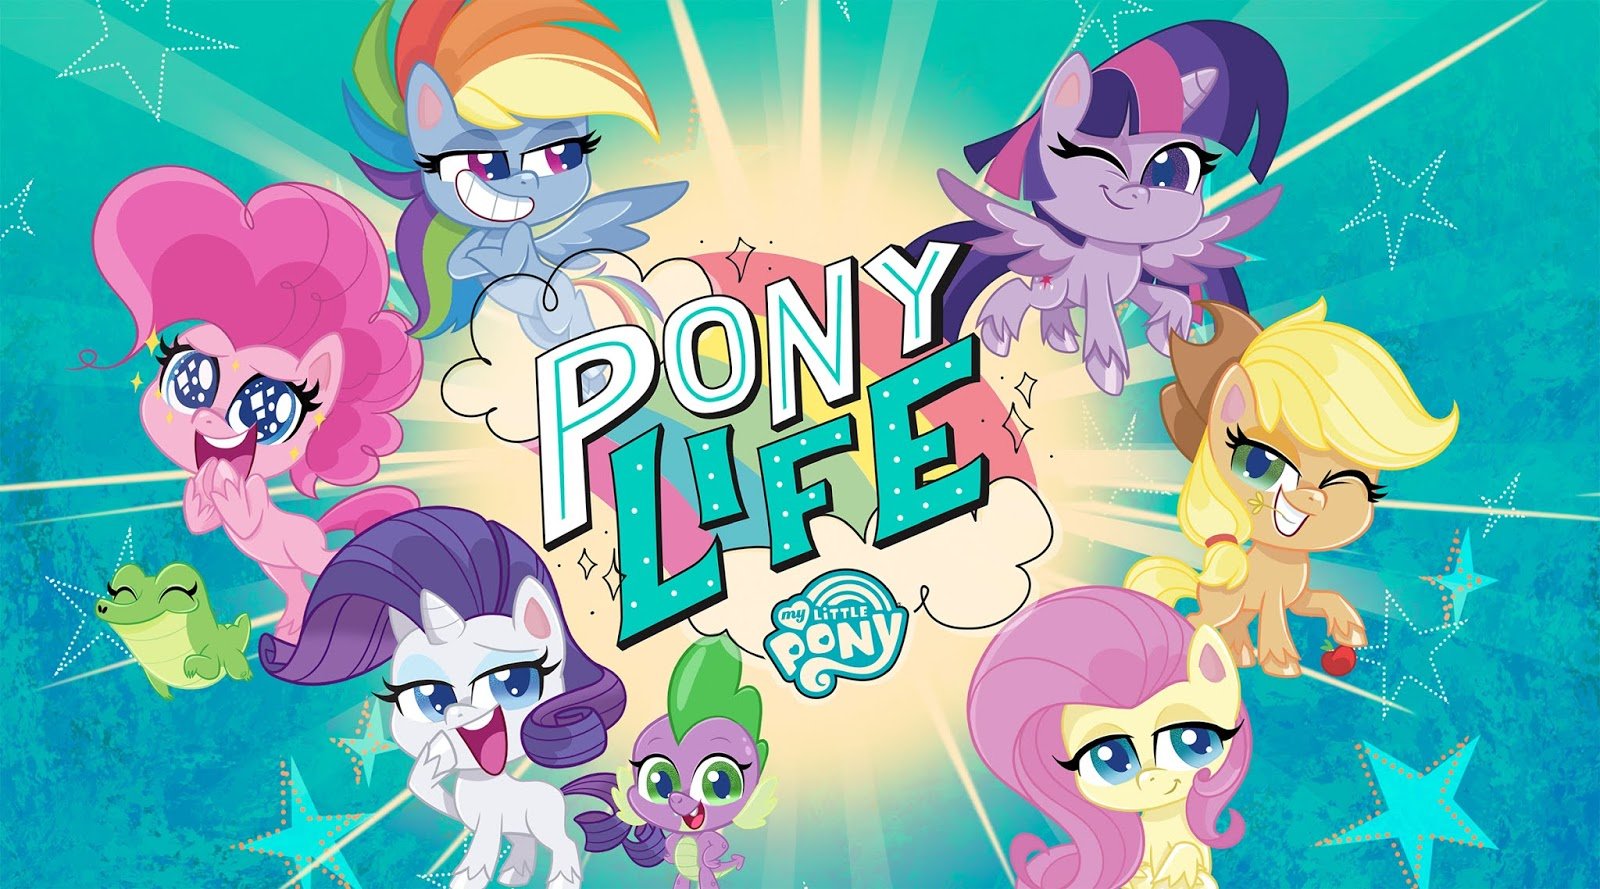 Equestria Daily Stuff!: Hasbro Presser Reveals New Show Pony Life and Image for 2020!